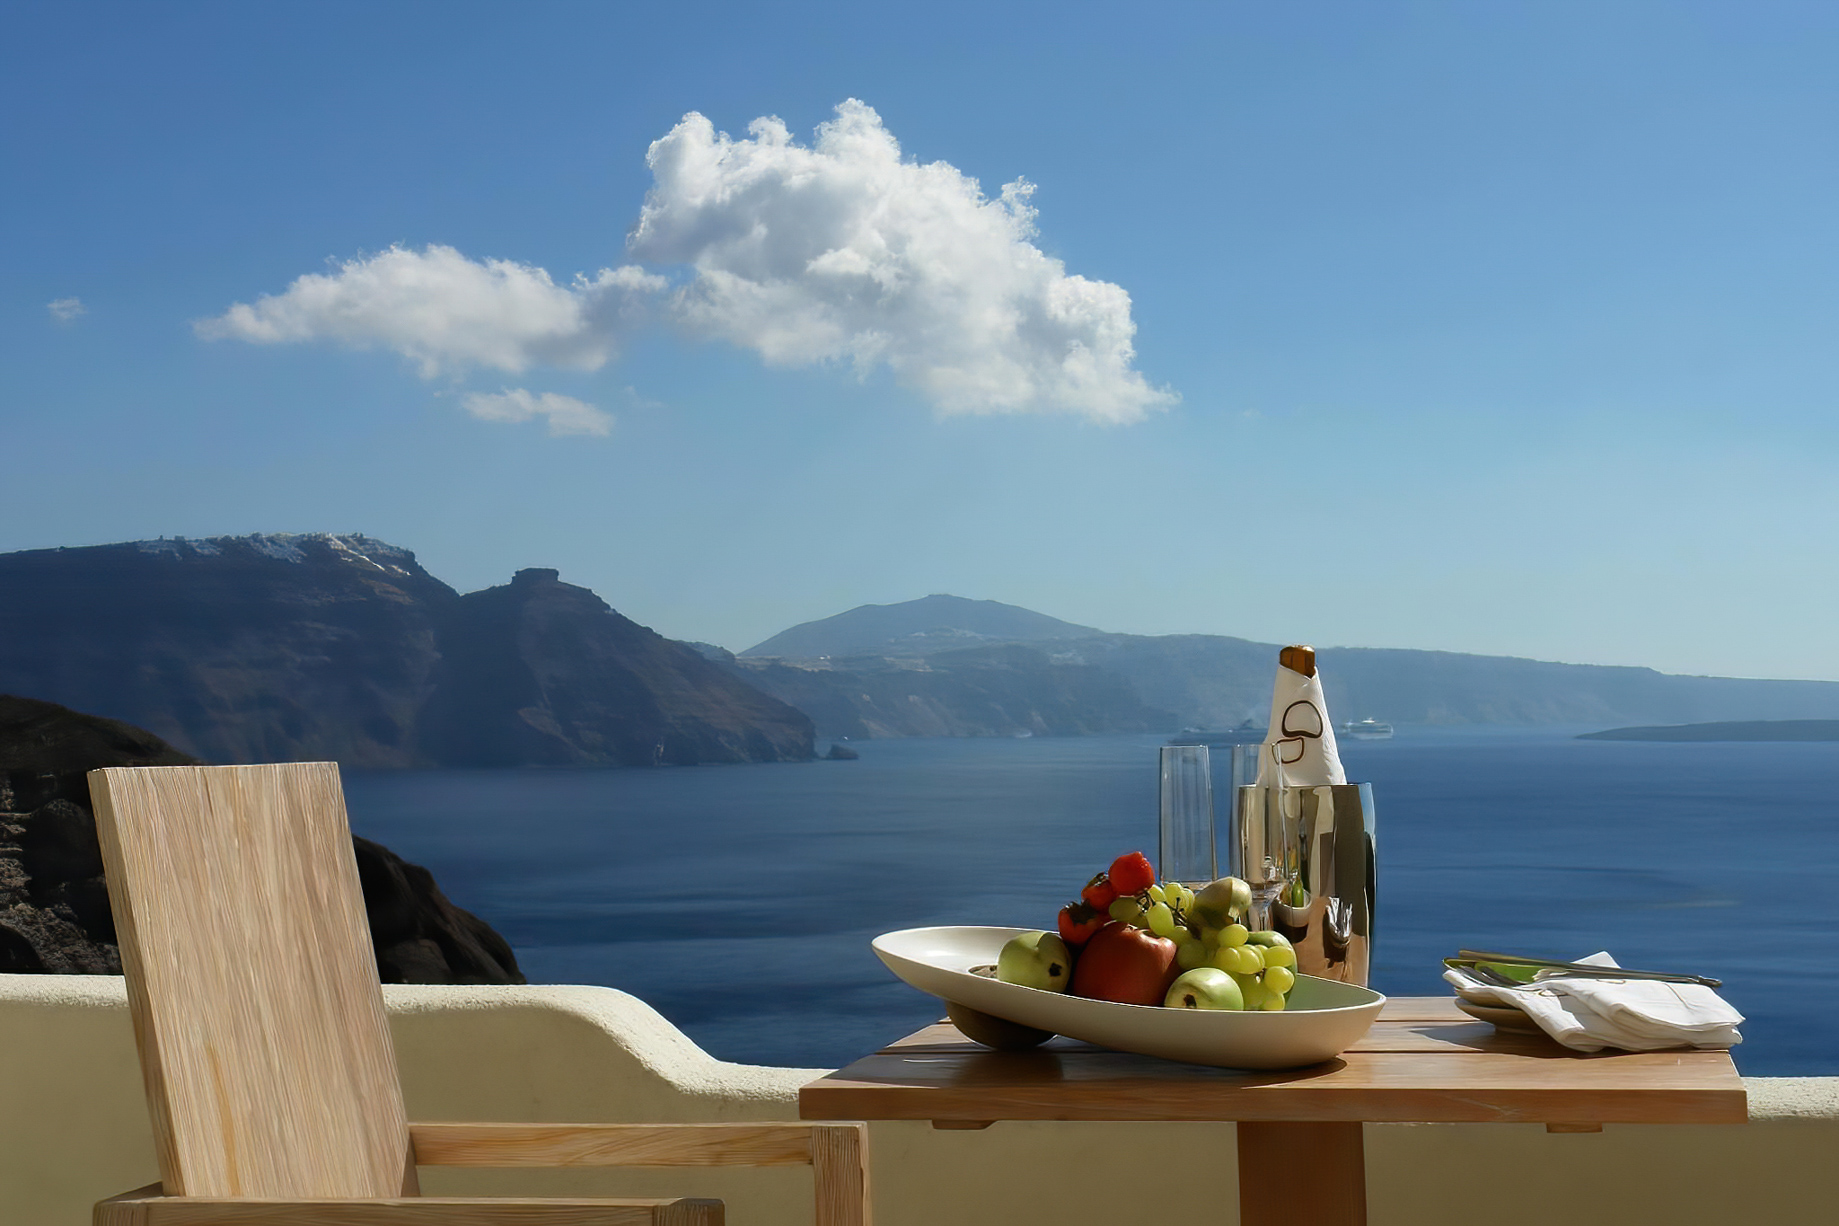 Mystique Hotel Santorini – Oia, Santorini Island, Greece – Clifftop Ocean View Dining